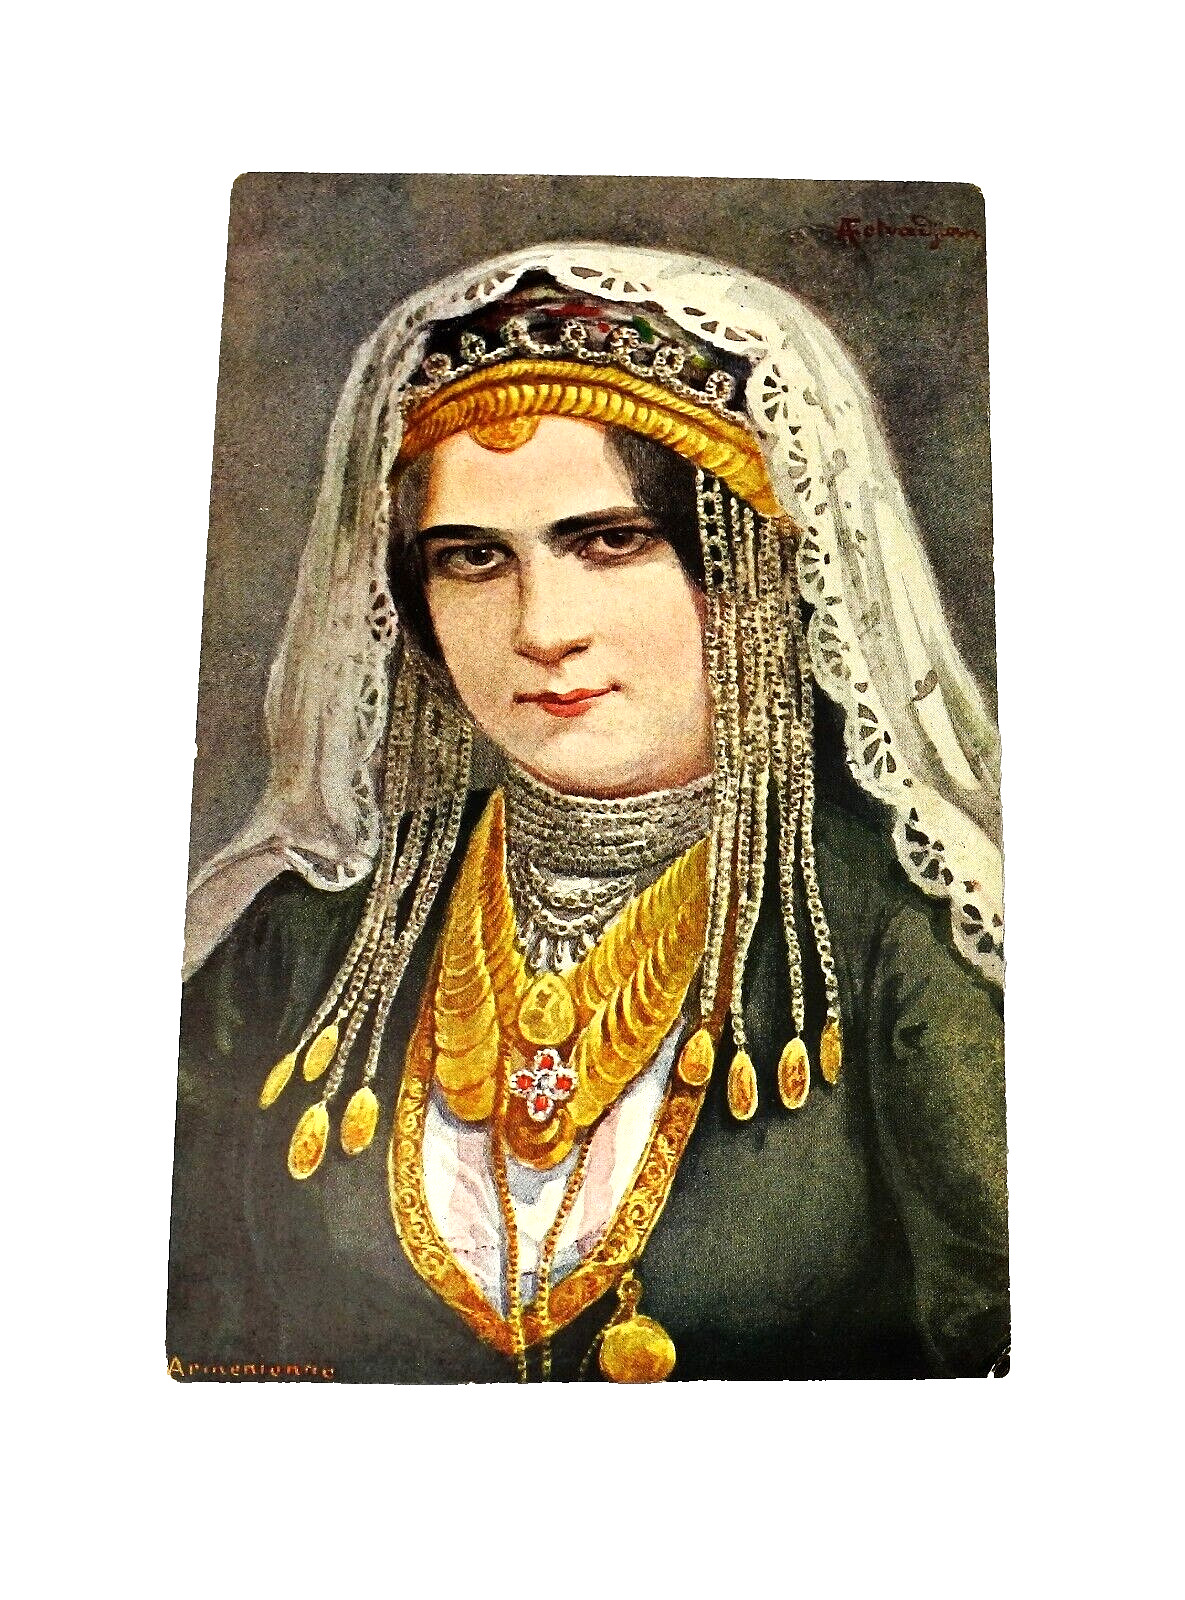 AN ARMENIAN GIRL Painting  by Fetvadjian Vintage Color Post Card